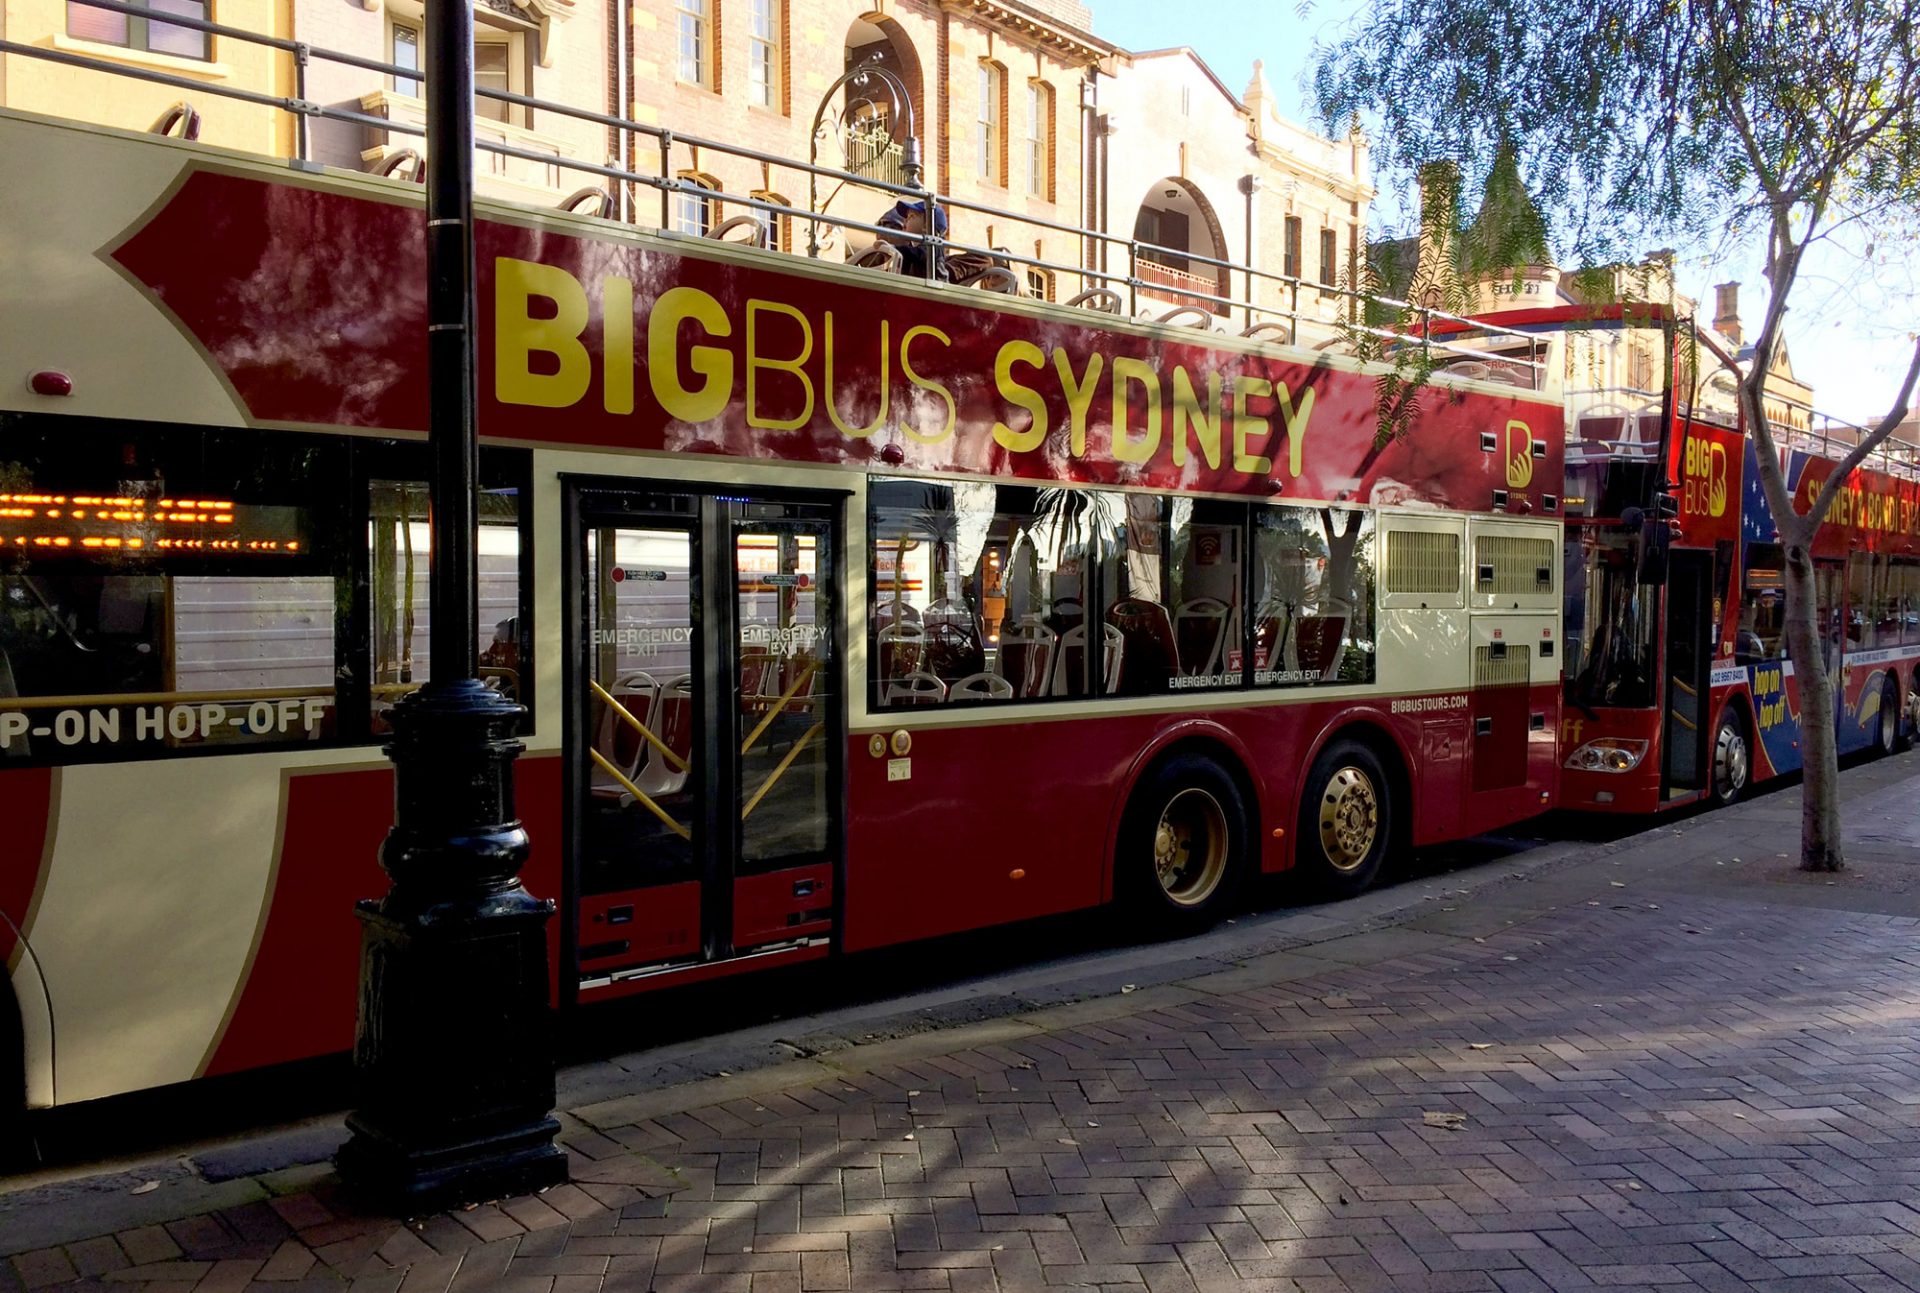  Sydney  Big Bus  Hop On Hop Off Sightseeing Tours  Open 